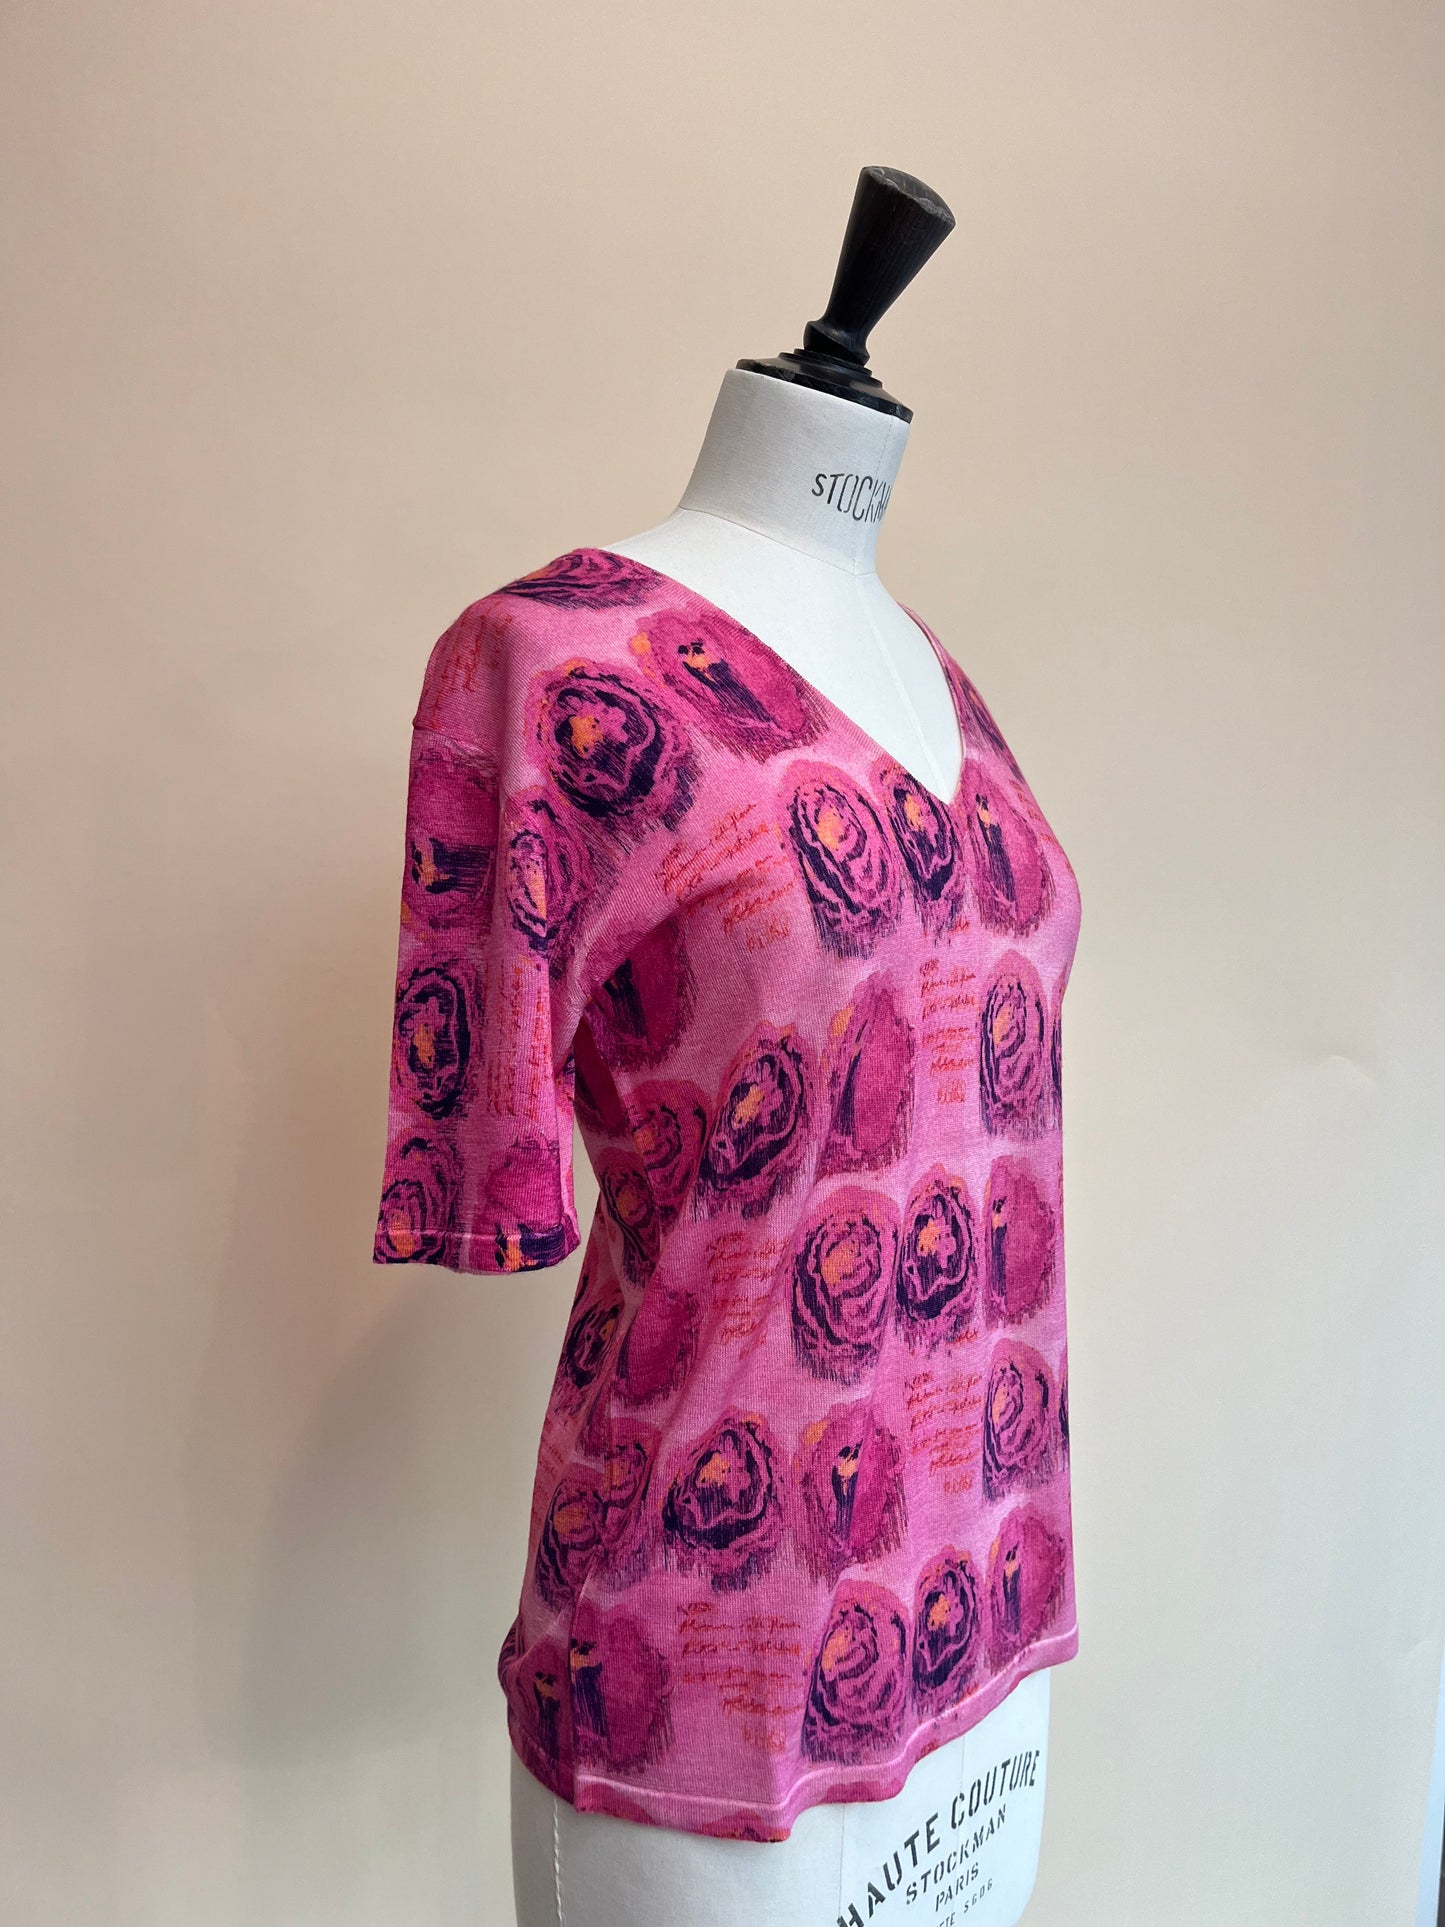 Printed Artworks - Knit V-neck Cashsilk Rose T-shirt